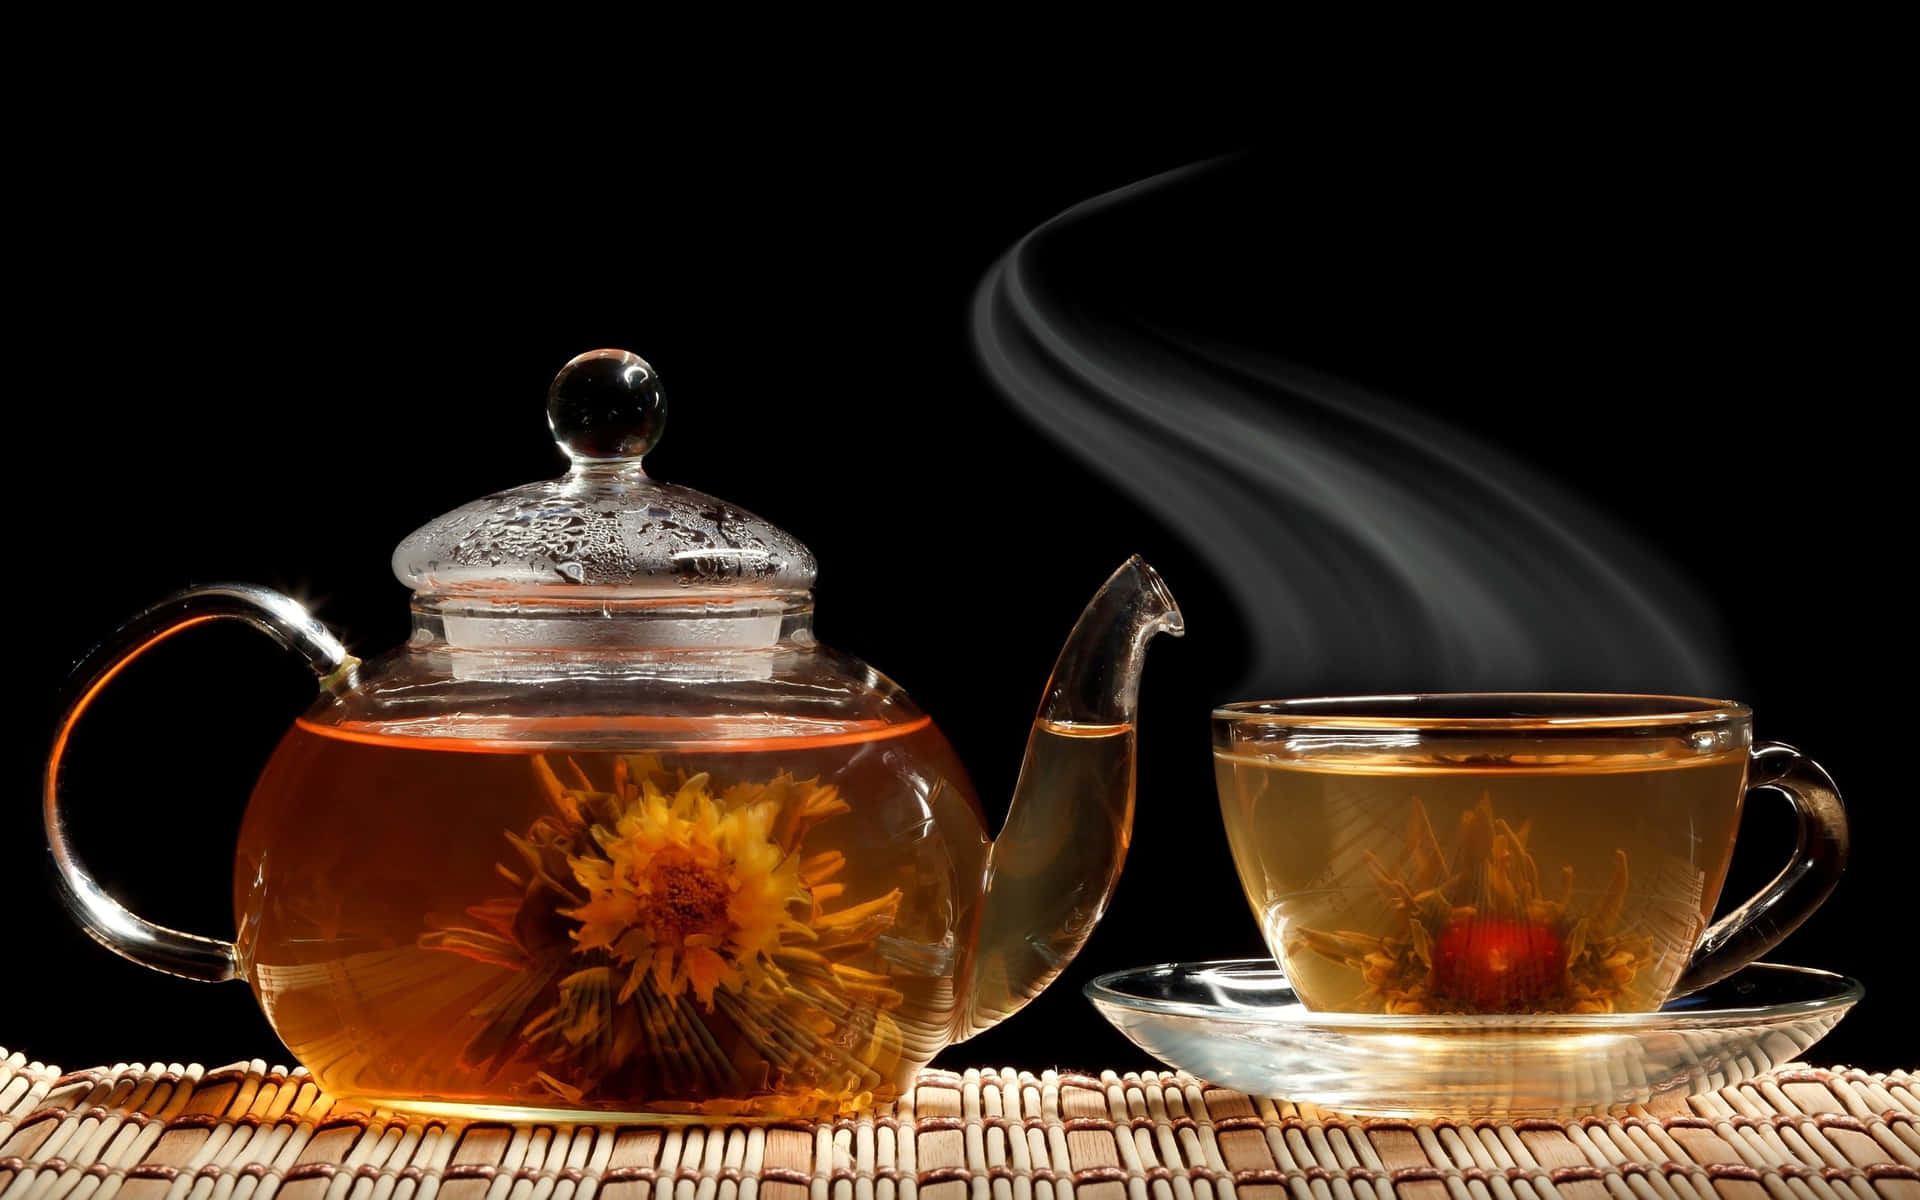 Exquisite Floral Tea in Elegant Teacup Wallpaper